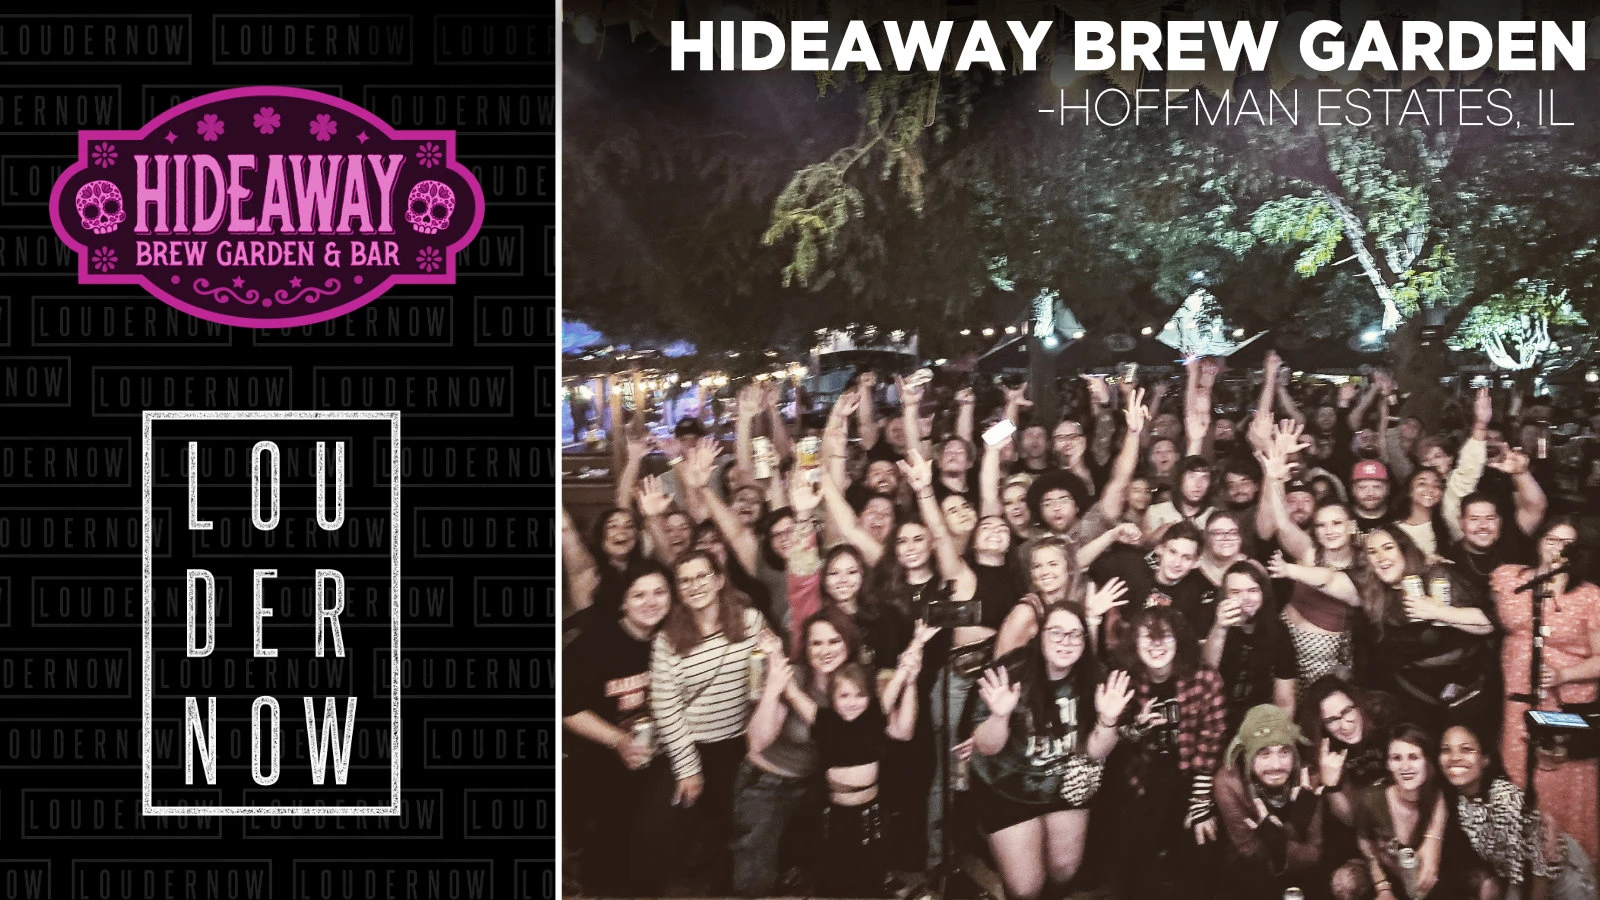 237-crowd-slide-show---hideaway-brew-garden-17053759239729.jpg